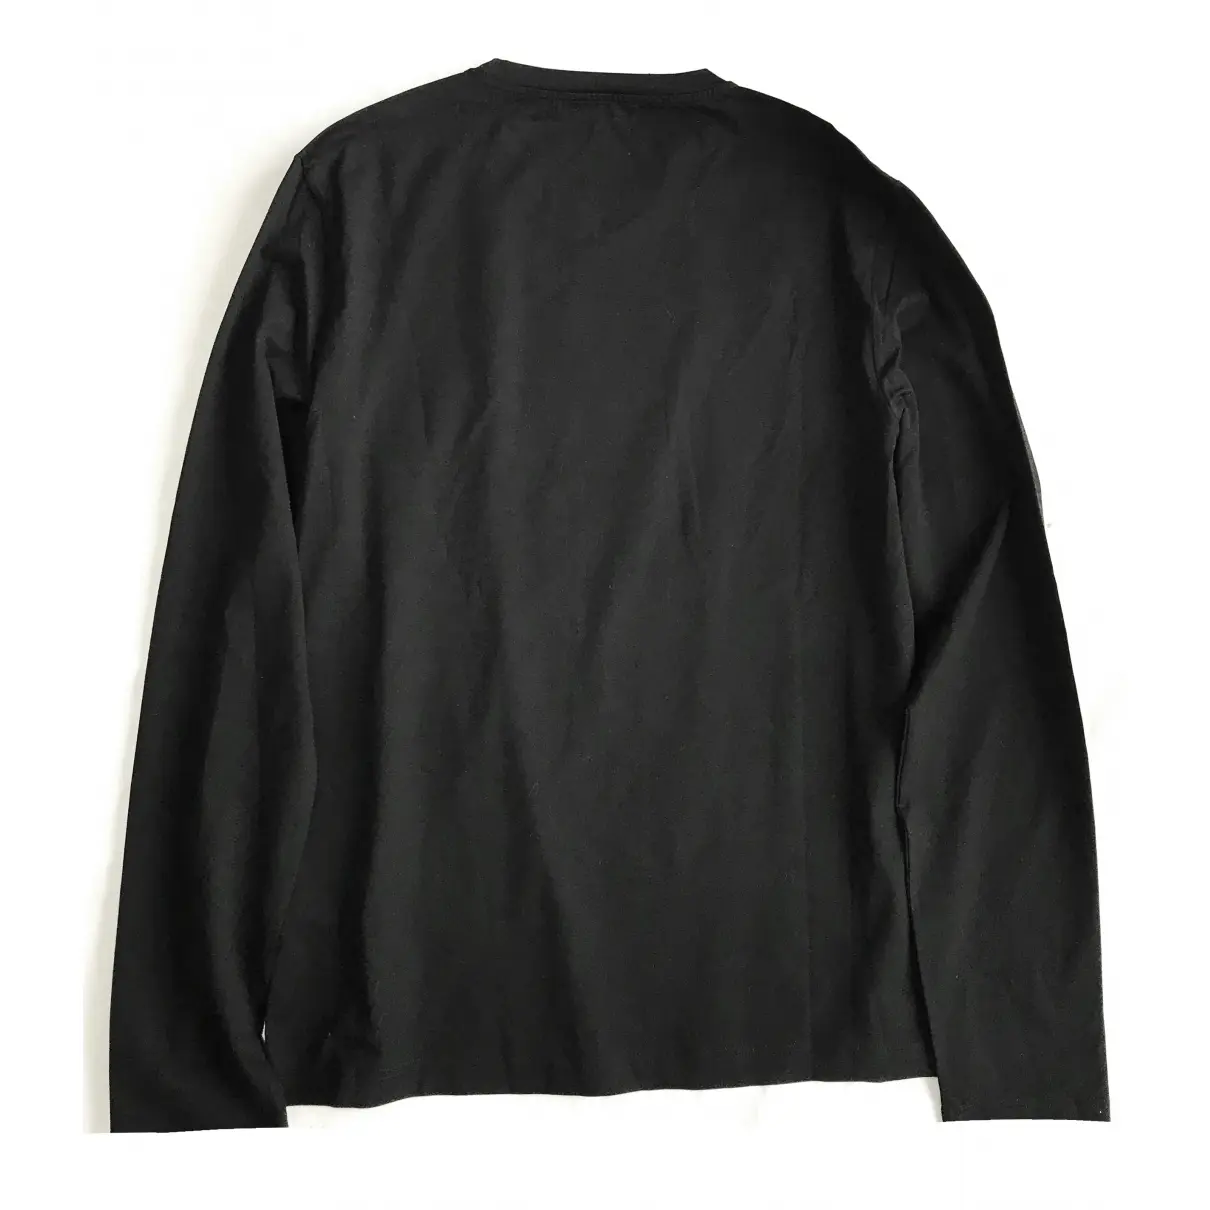 Buy Prada Black Cotton T-shirt online